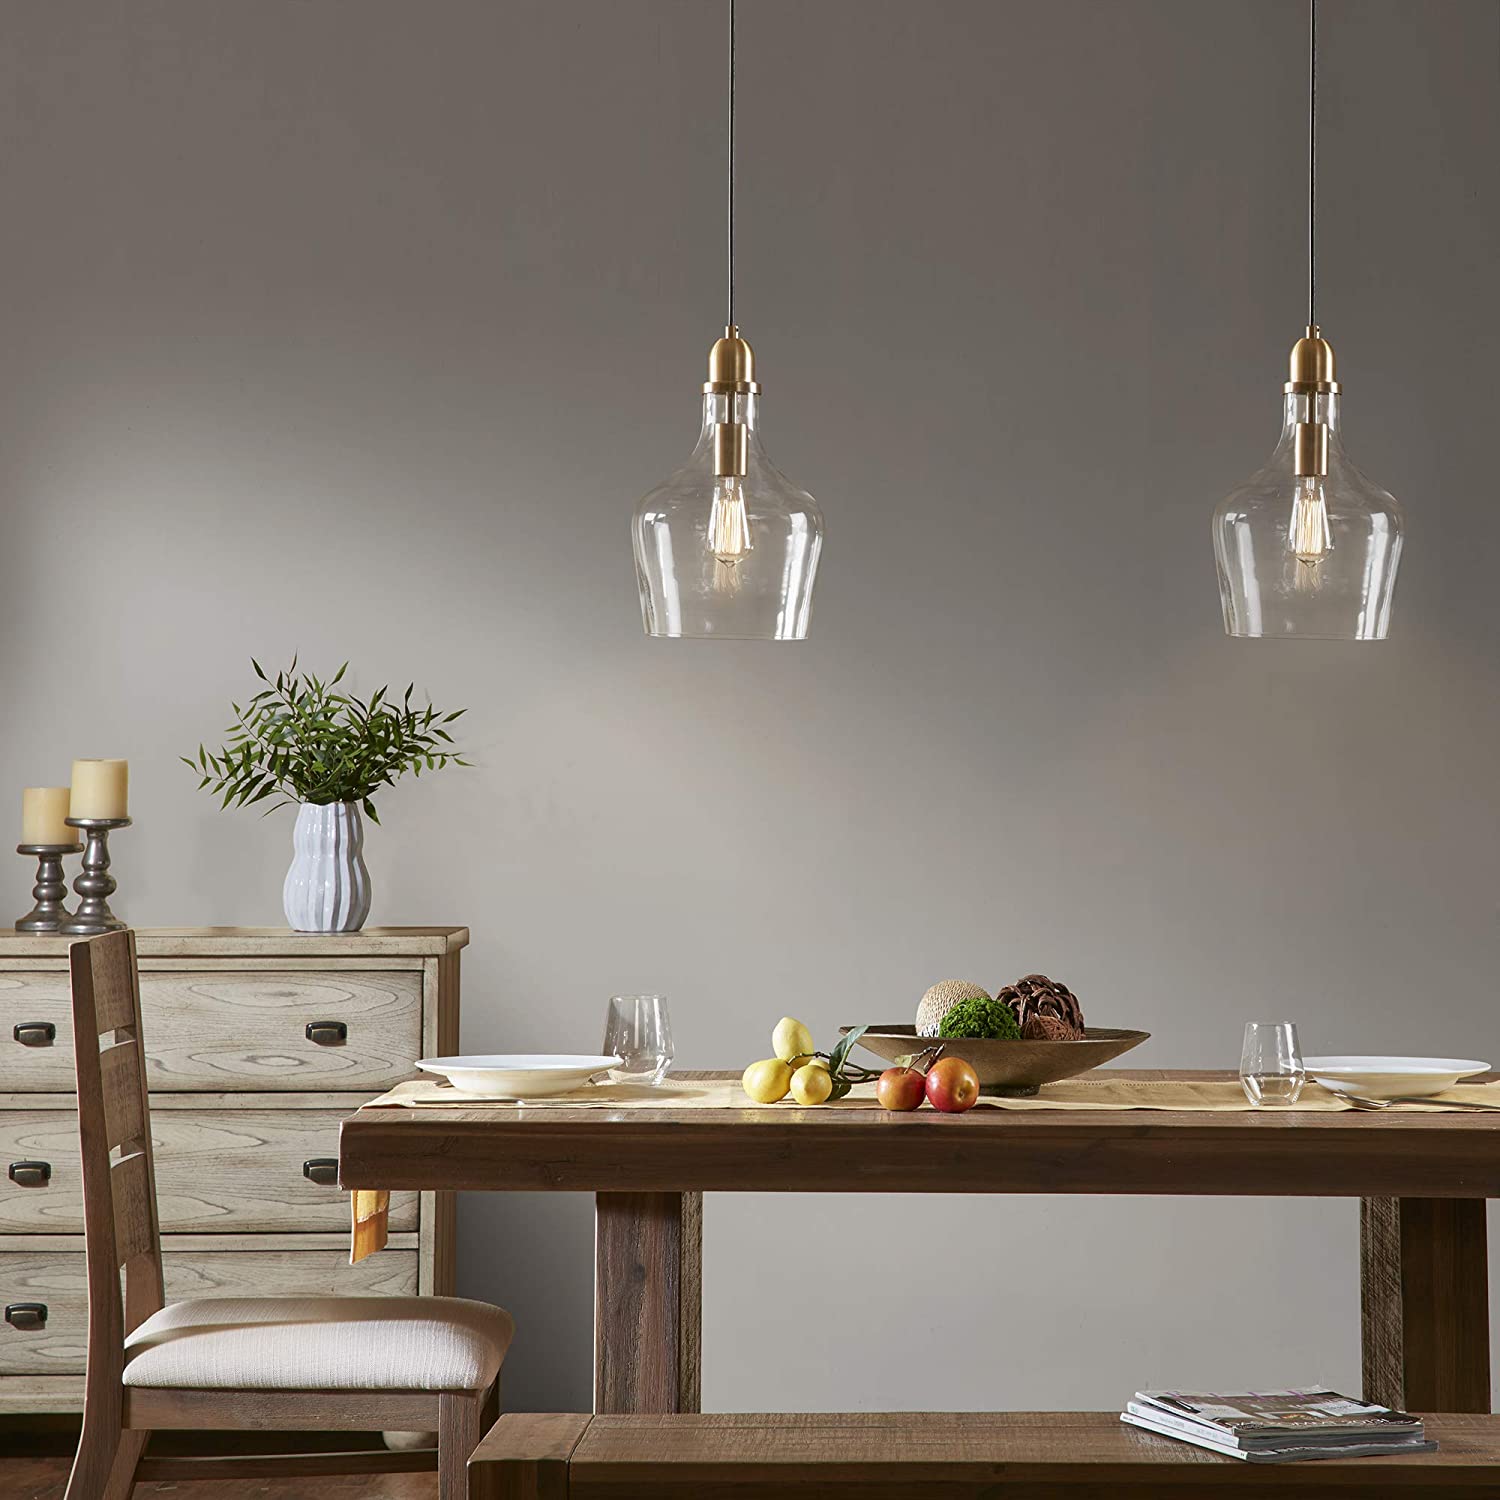 Dining blown glass pendant lights,kitchen pendant light fixture